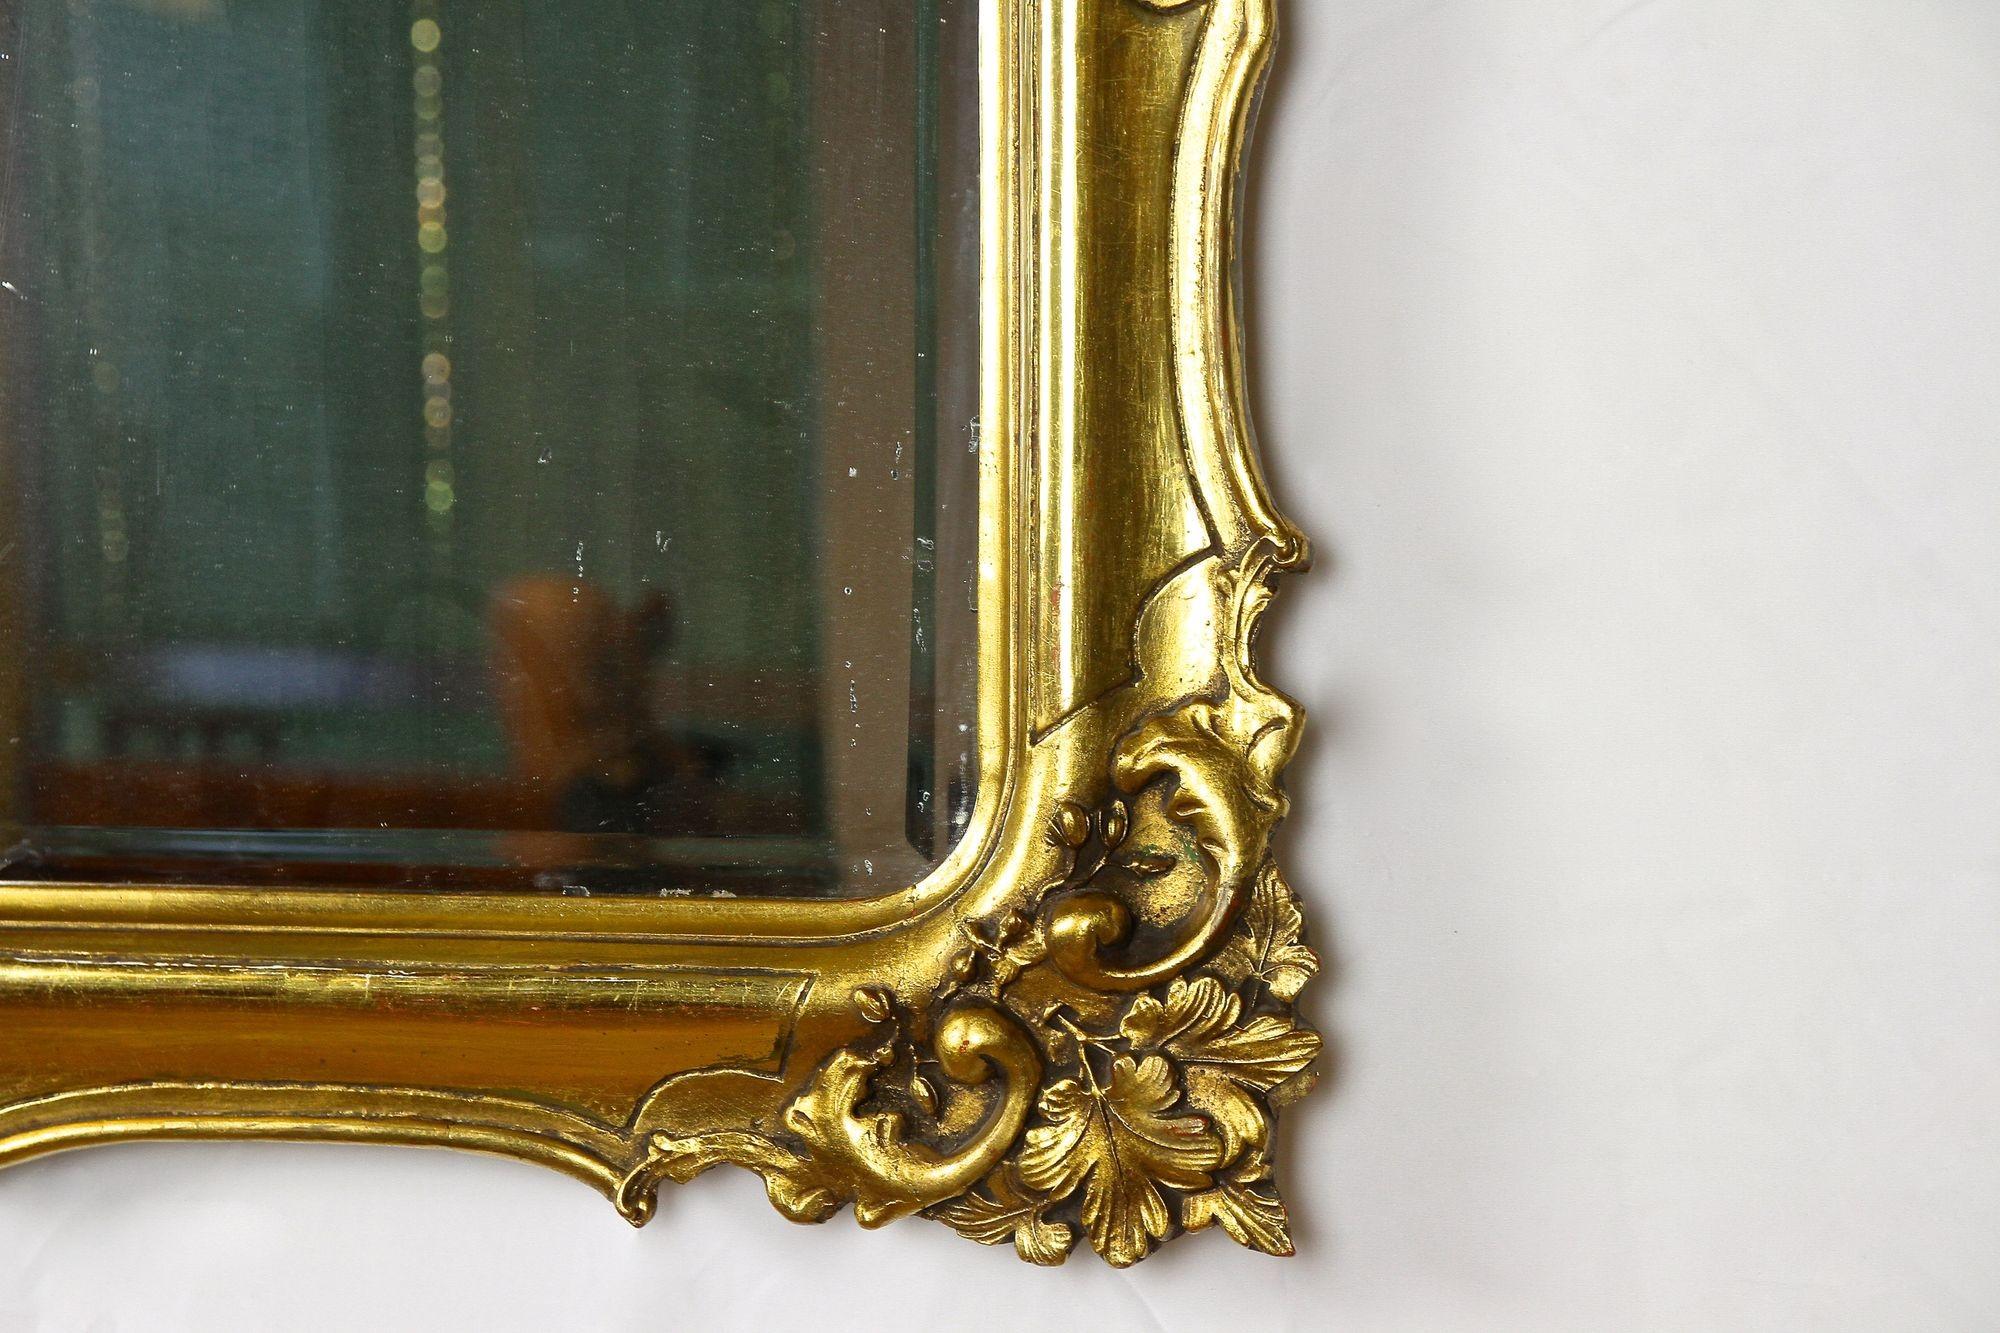 19th Century Biedermeier Wall Mirror Gold Leaf Plated, Austria circa 1830 In Good Condition For Sale In Lichtenberg, AT